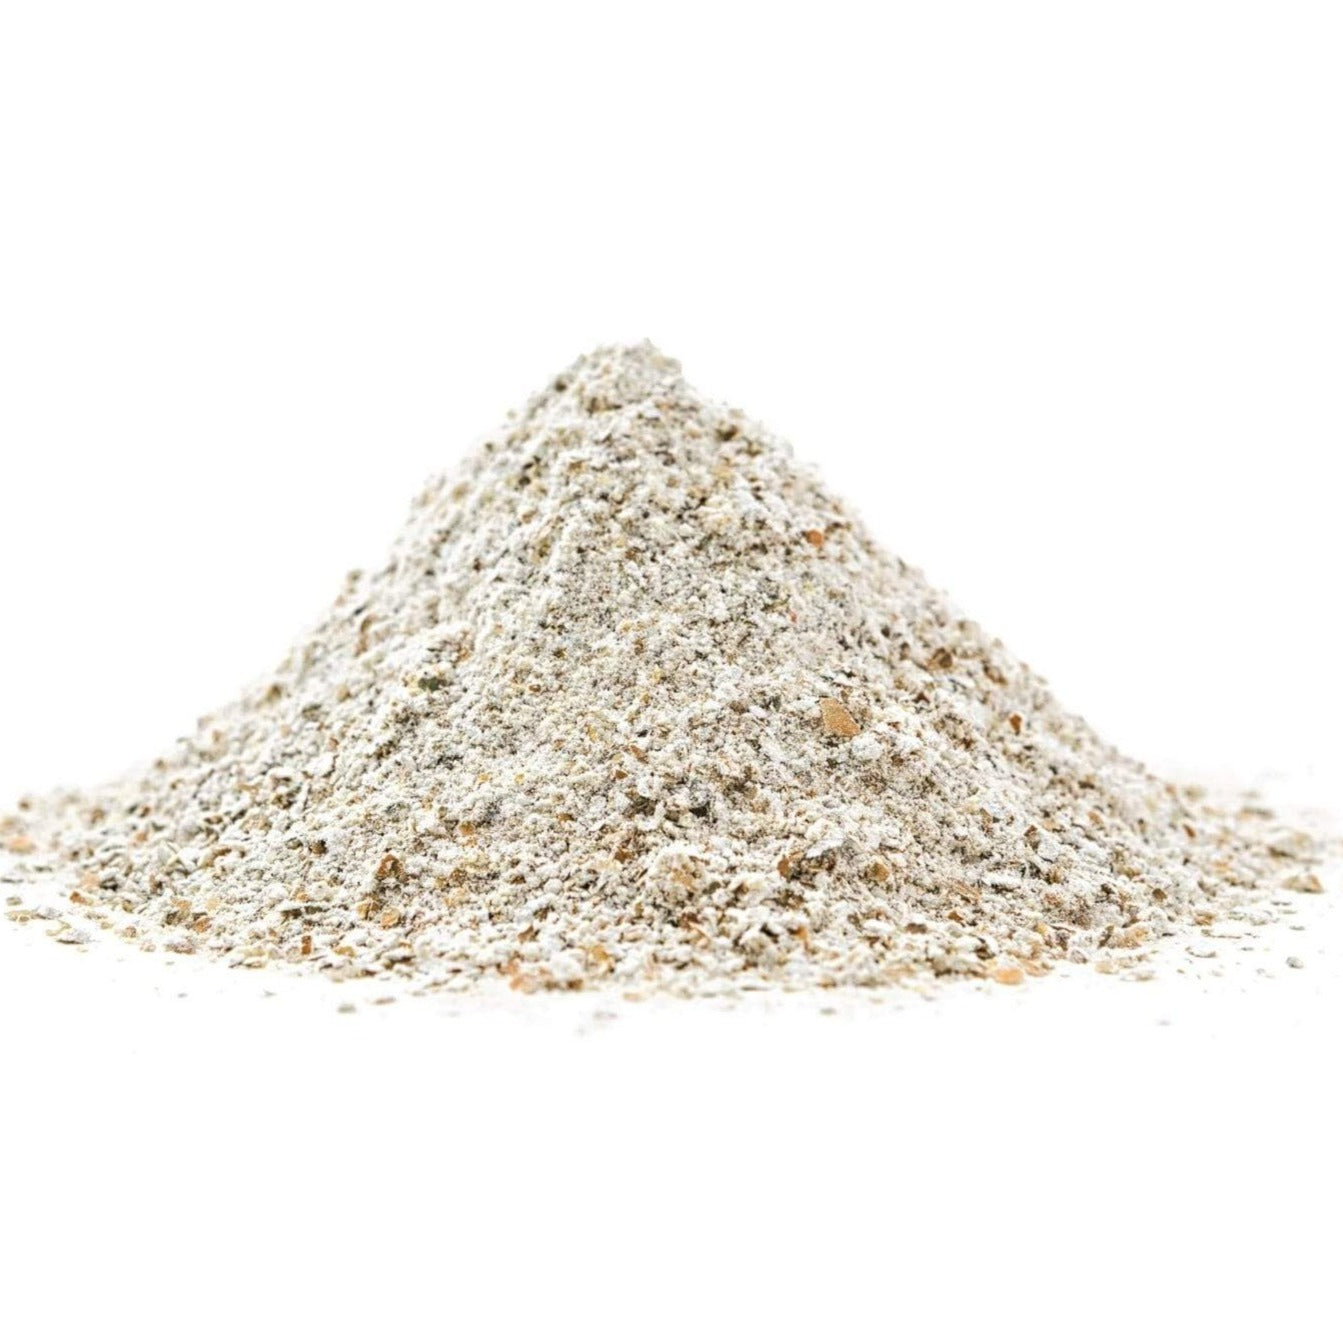 Rye Meal Flour / Gram - Zero Waste Bali